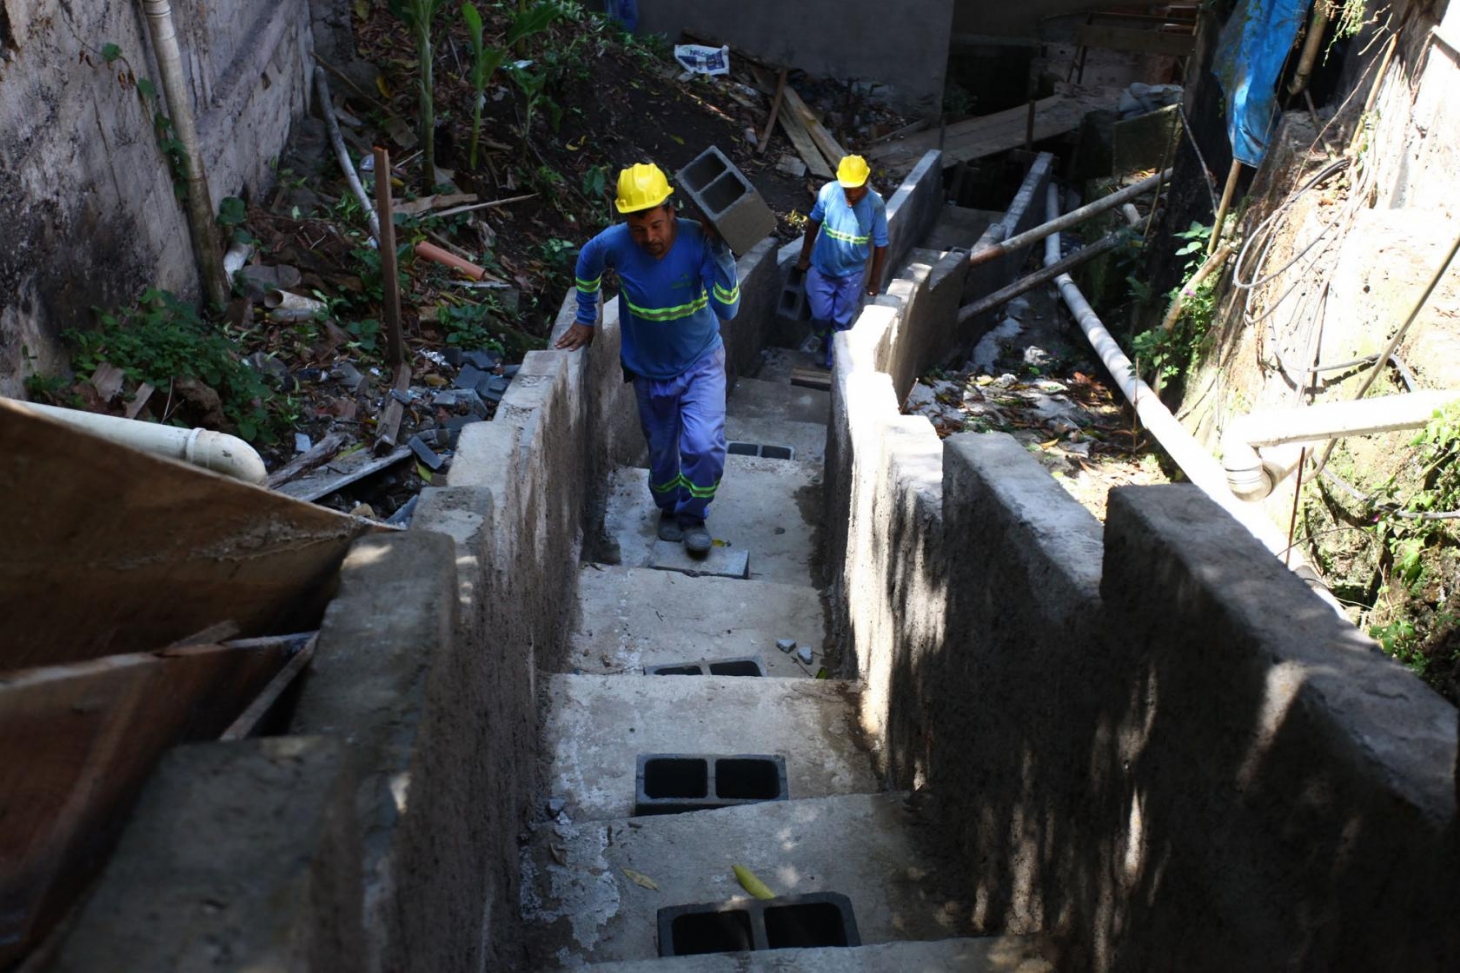 Escadaria hidráulica no Monte Serrat está na etapa final | Jornal da Orla